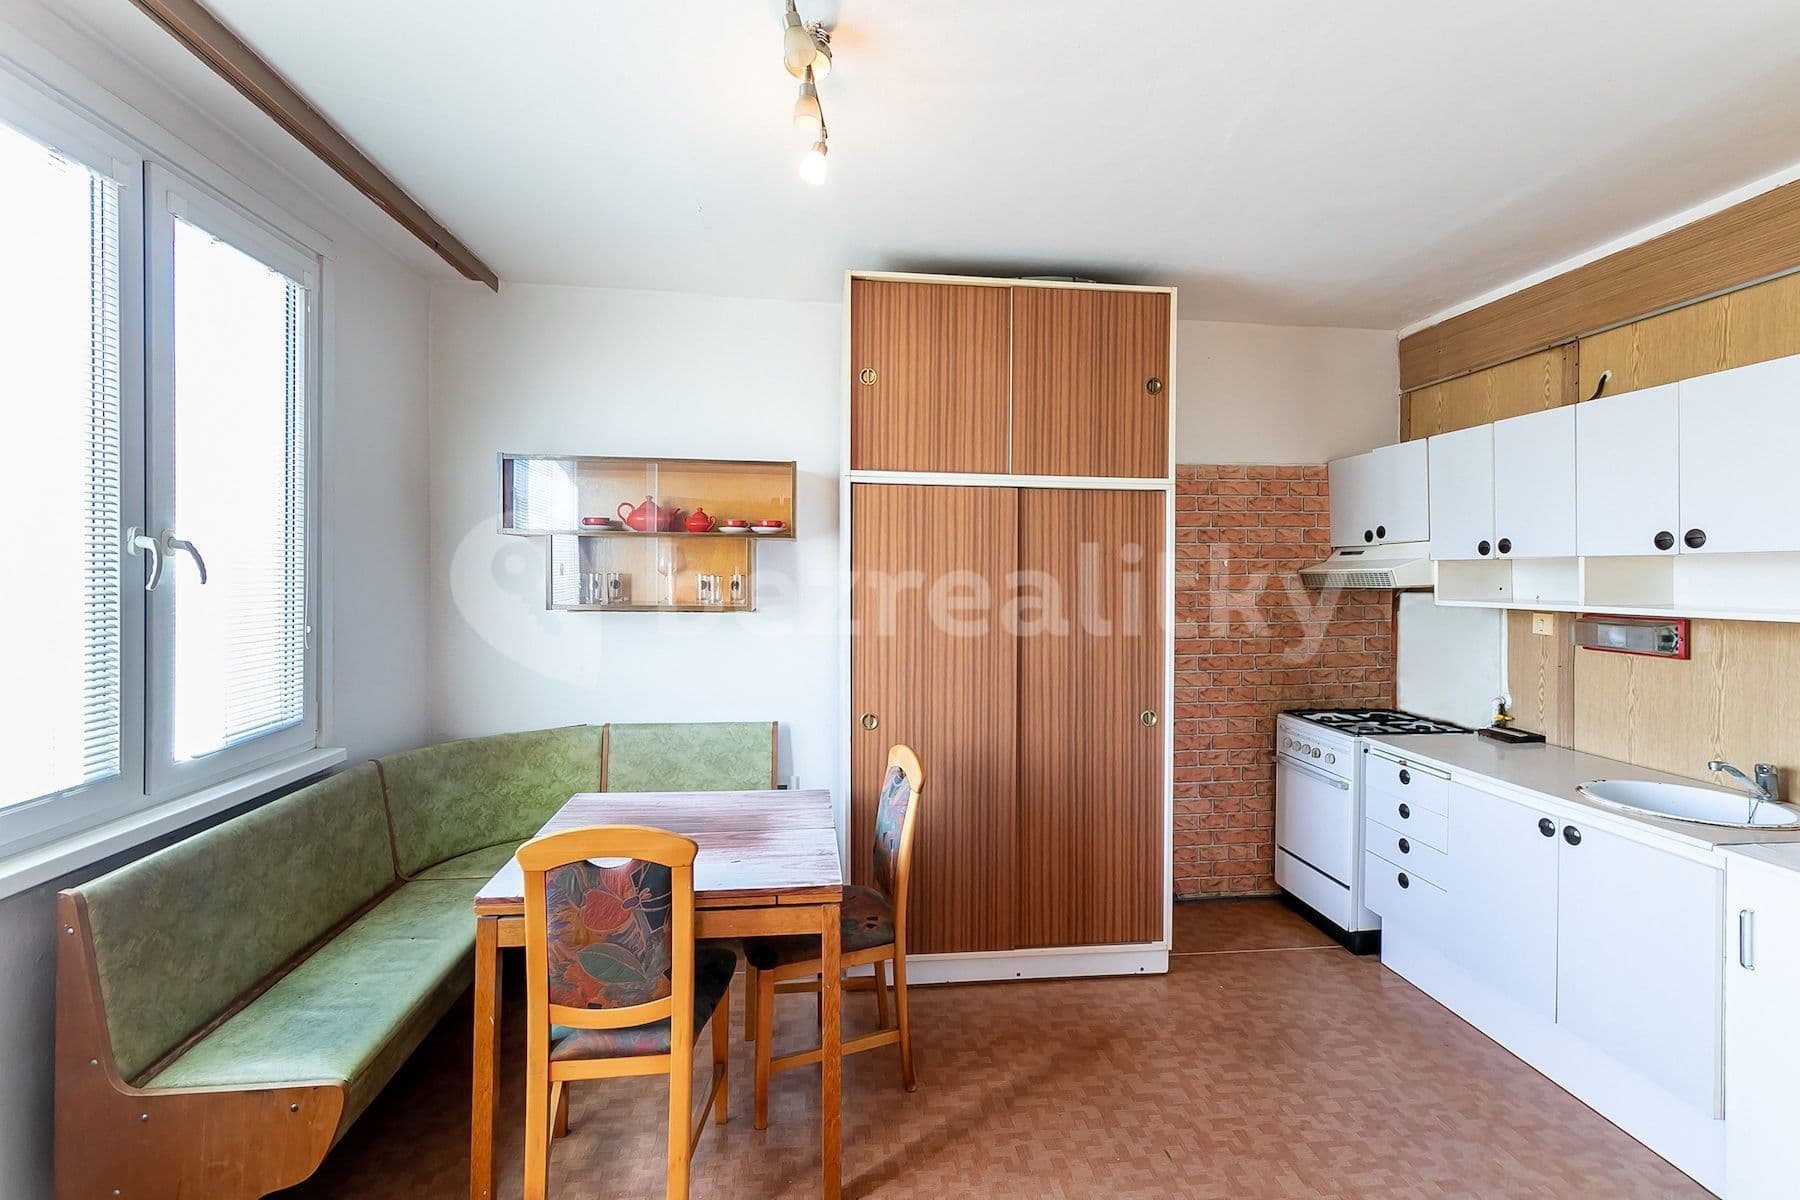 1 bedroom flat for sale, 34 m², Tř. T. G. Masaryka, Nový Bor, Liberecký Region